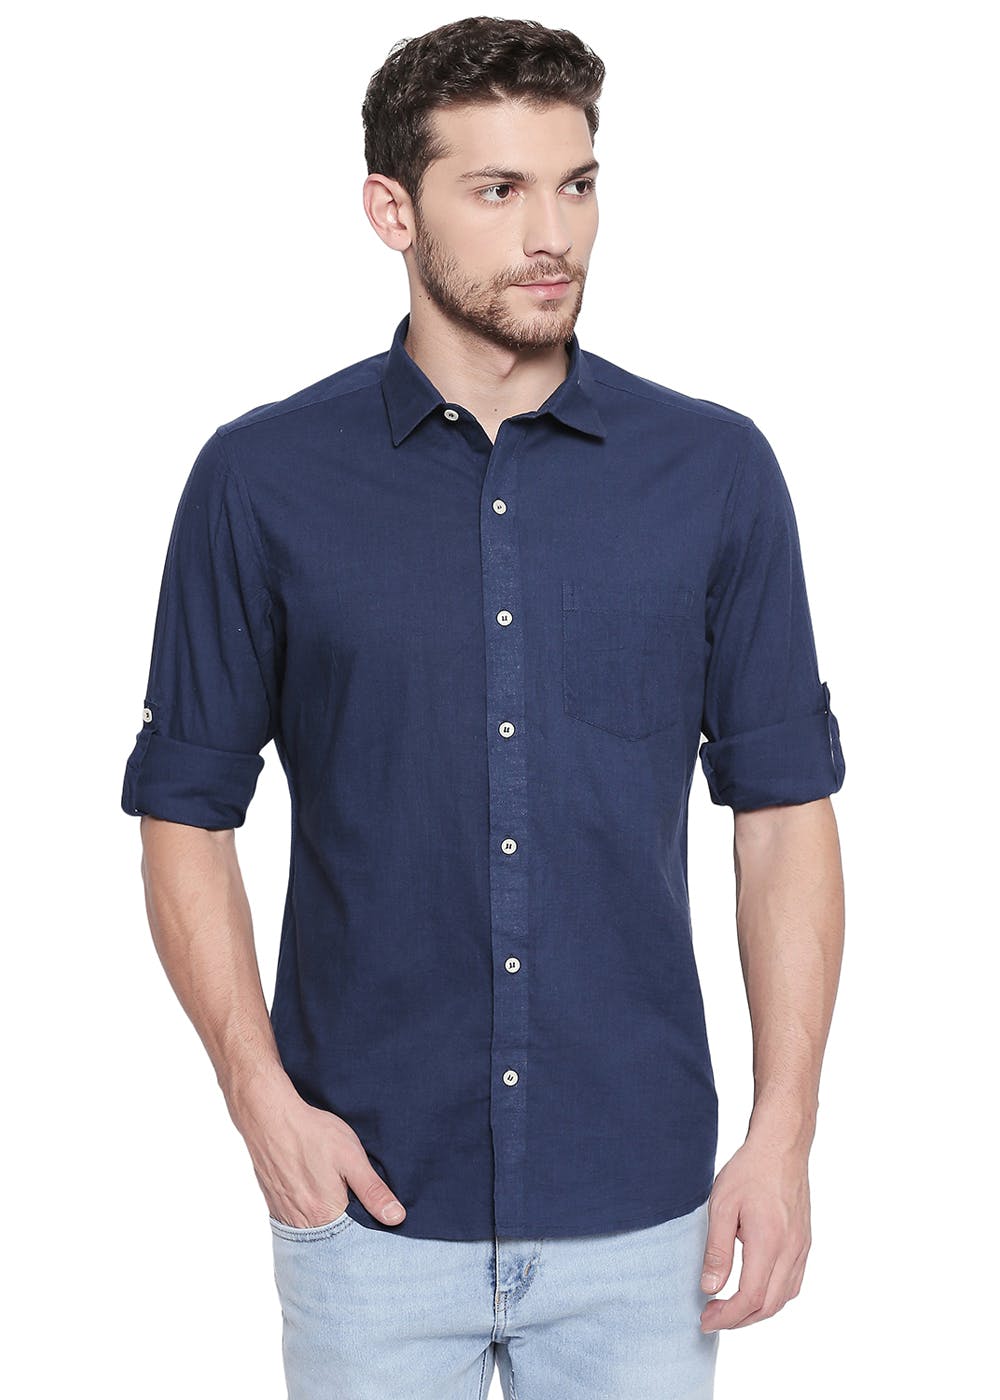 Get Royal Blue Solid Casual Cotton-Linen Shirt at ₹ 799 | LBB Shop